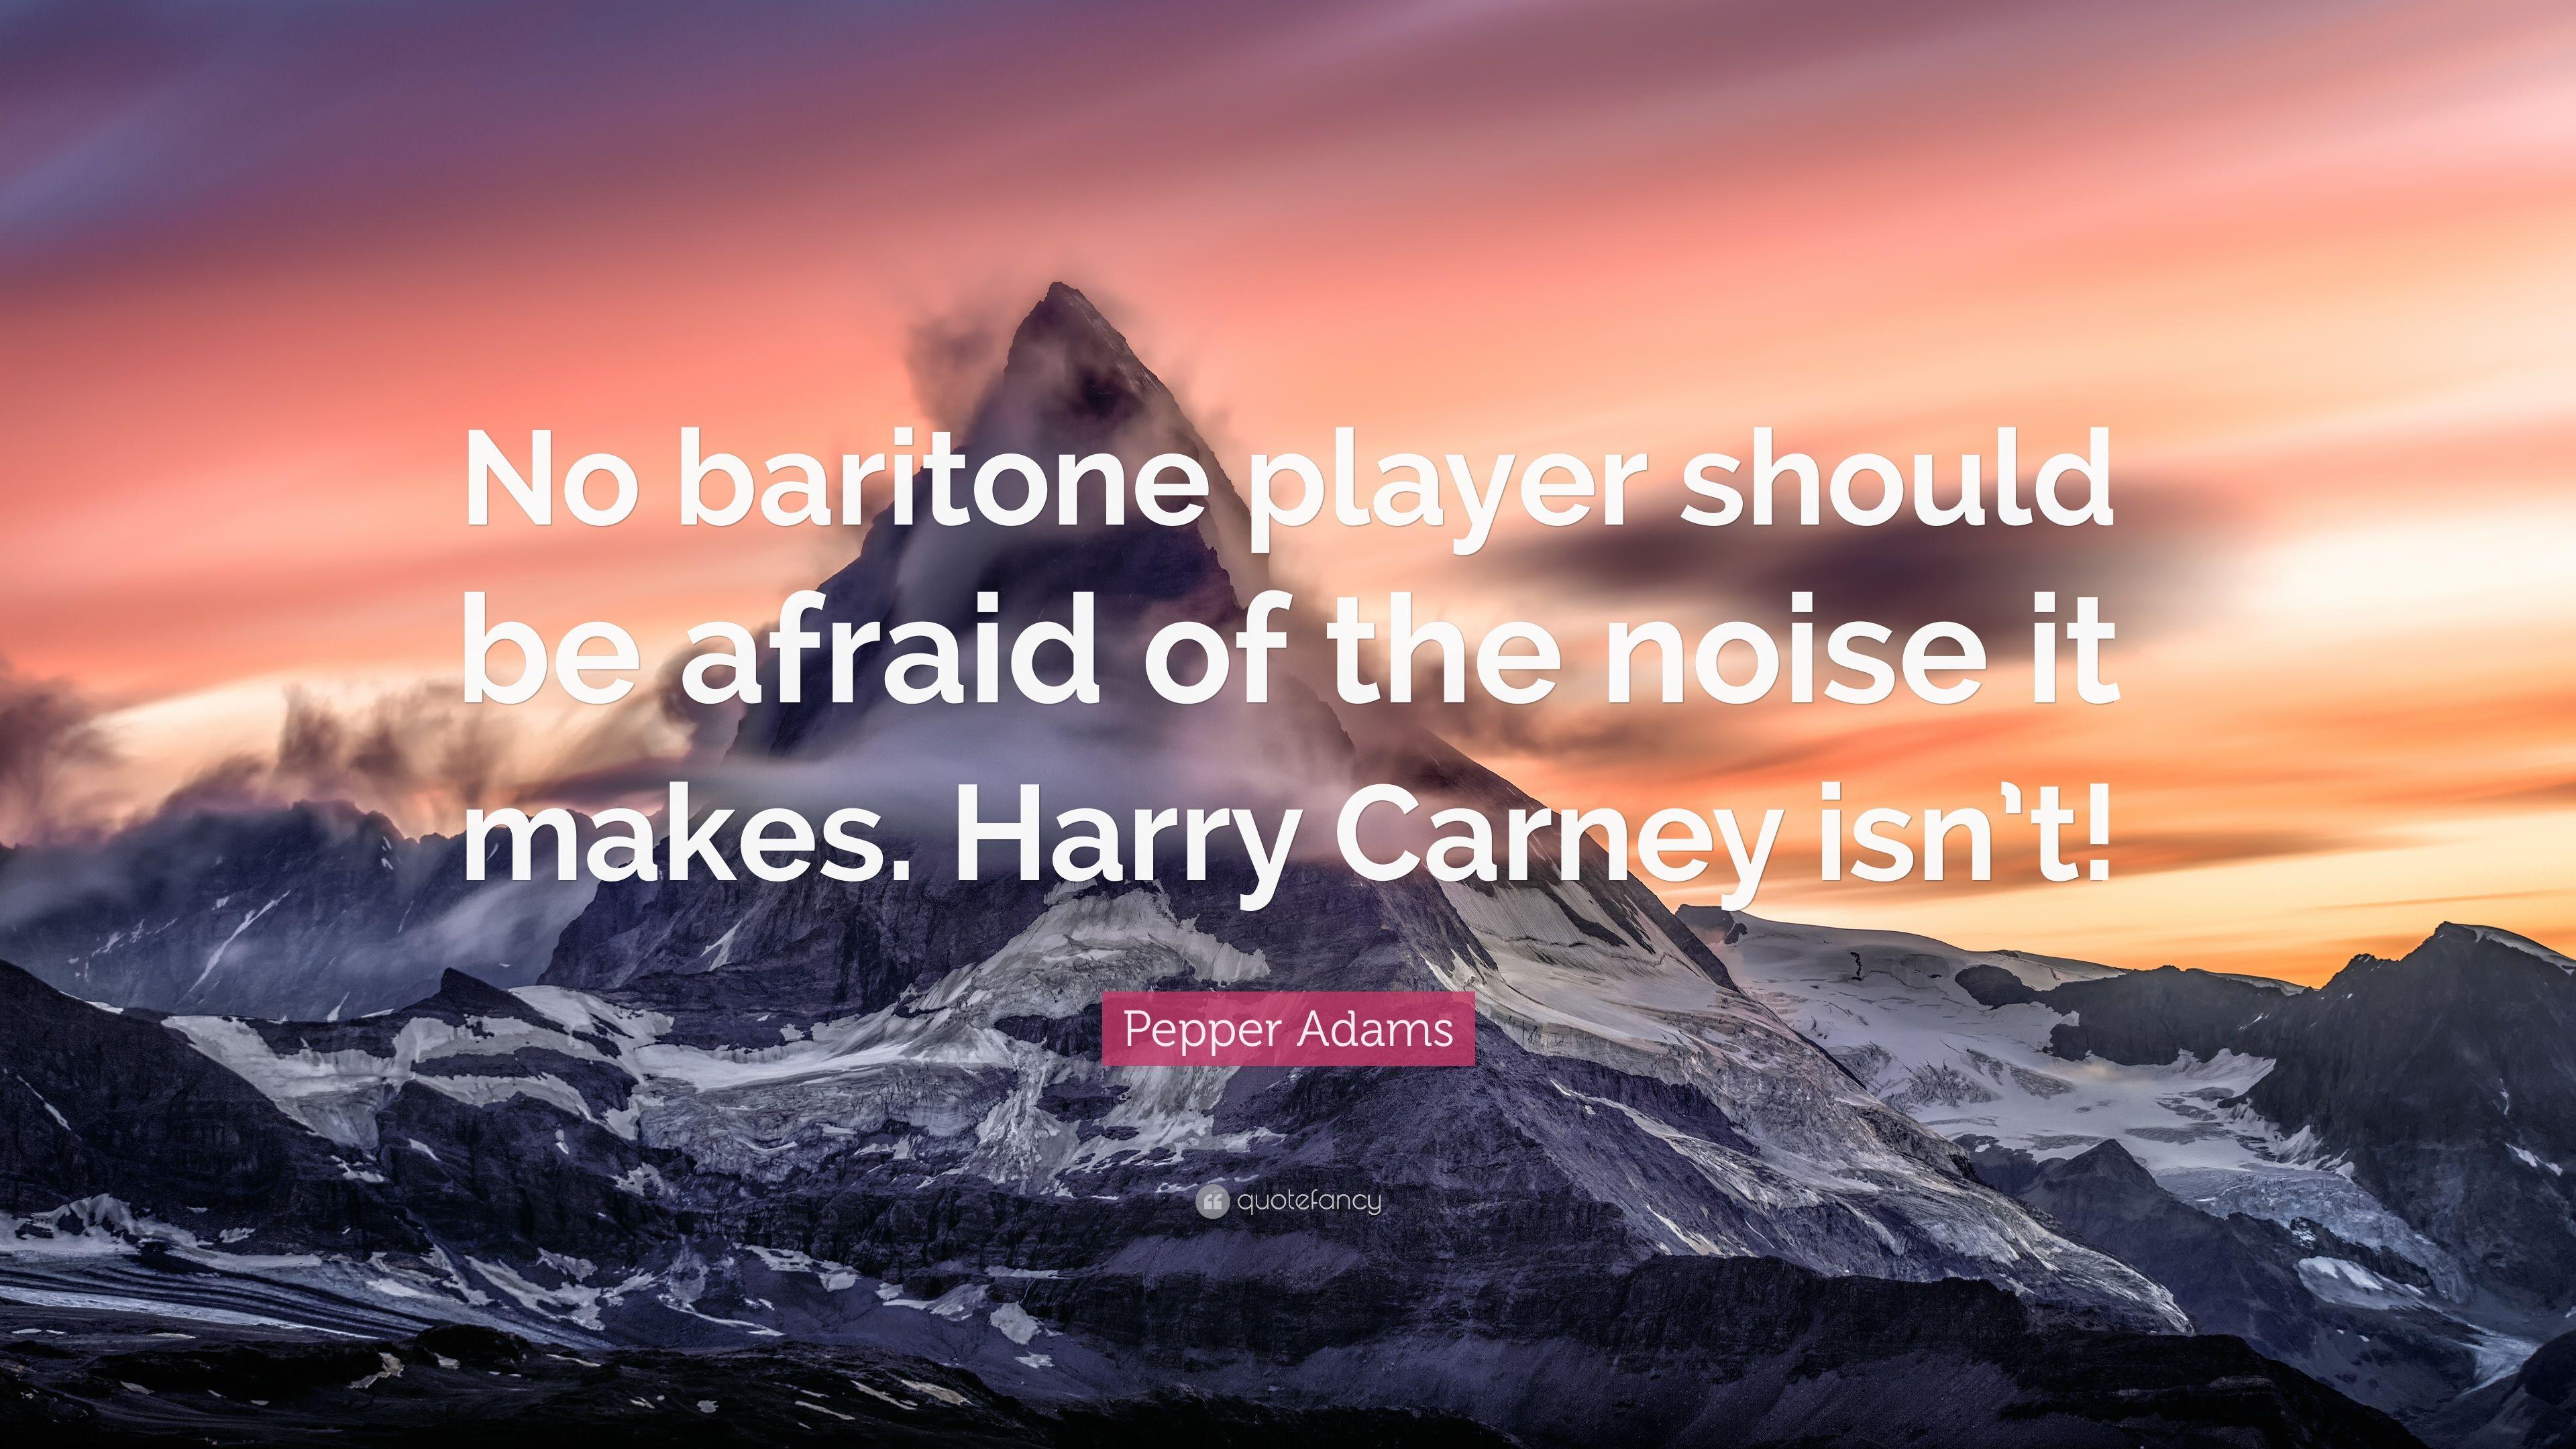 Pepper Adams Quote: “No baritone player should be afraid